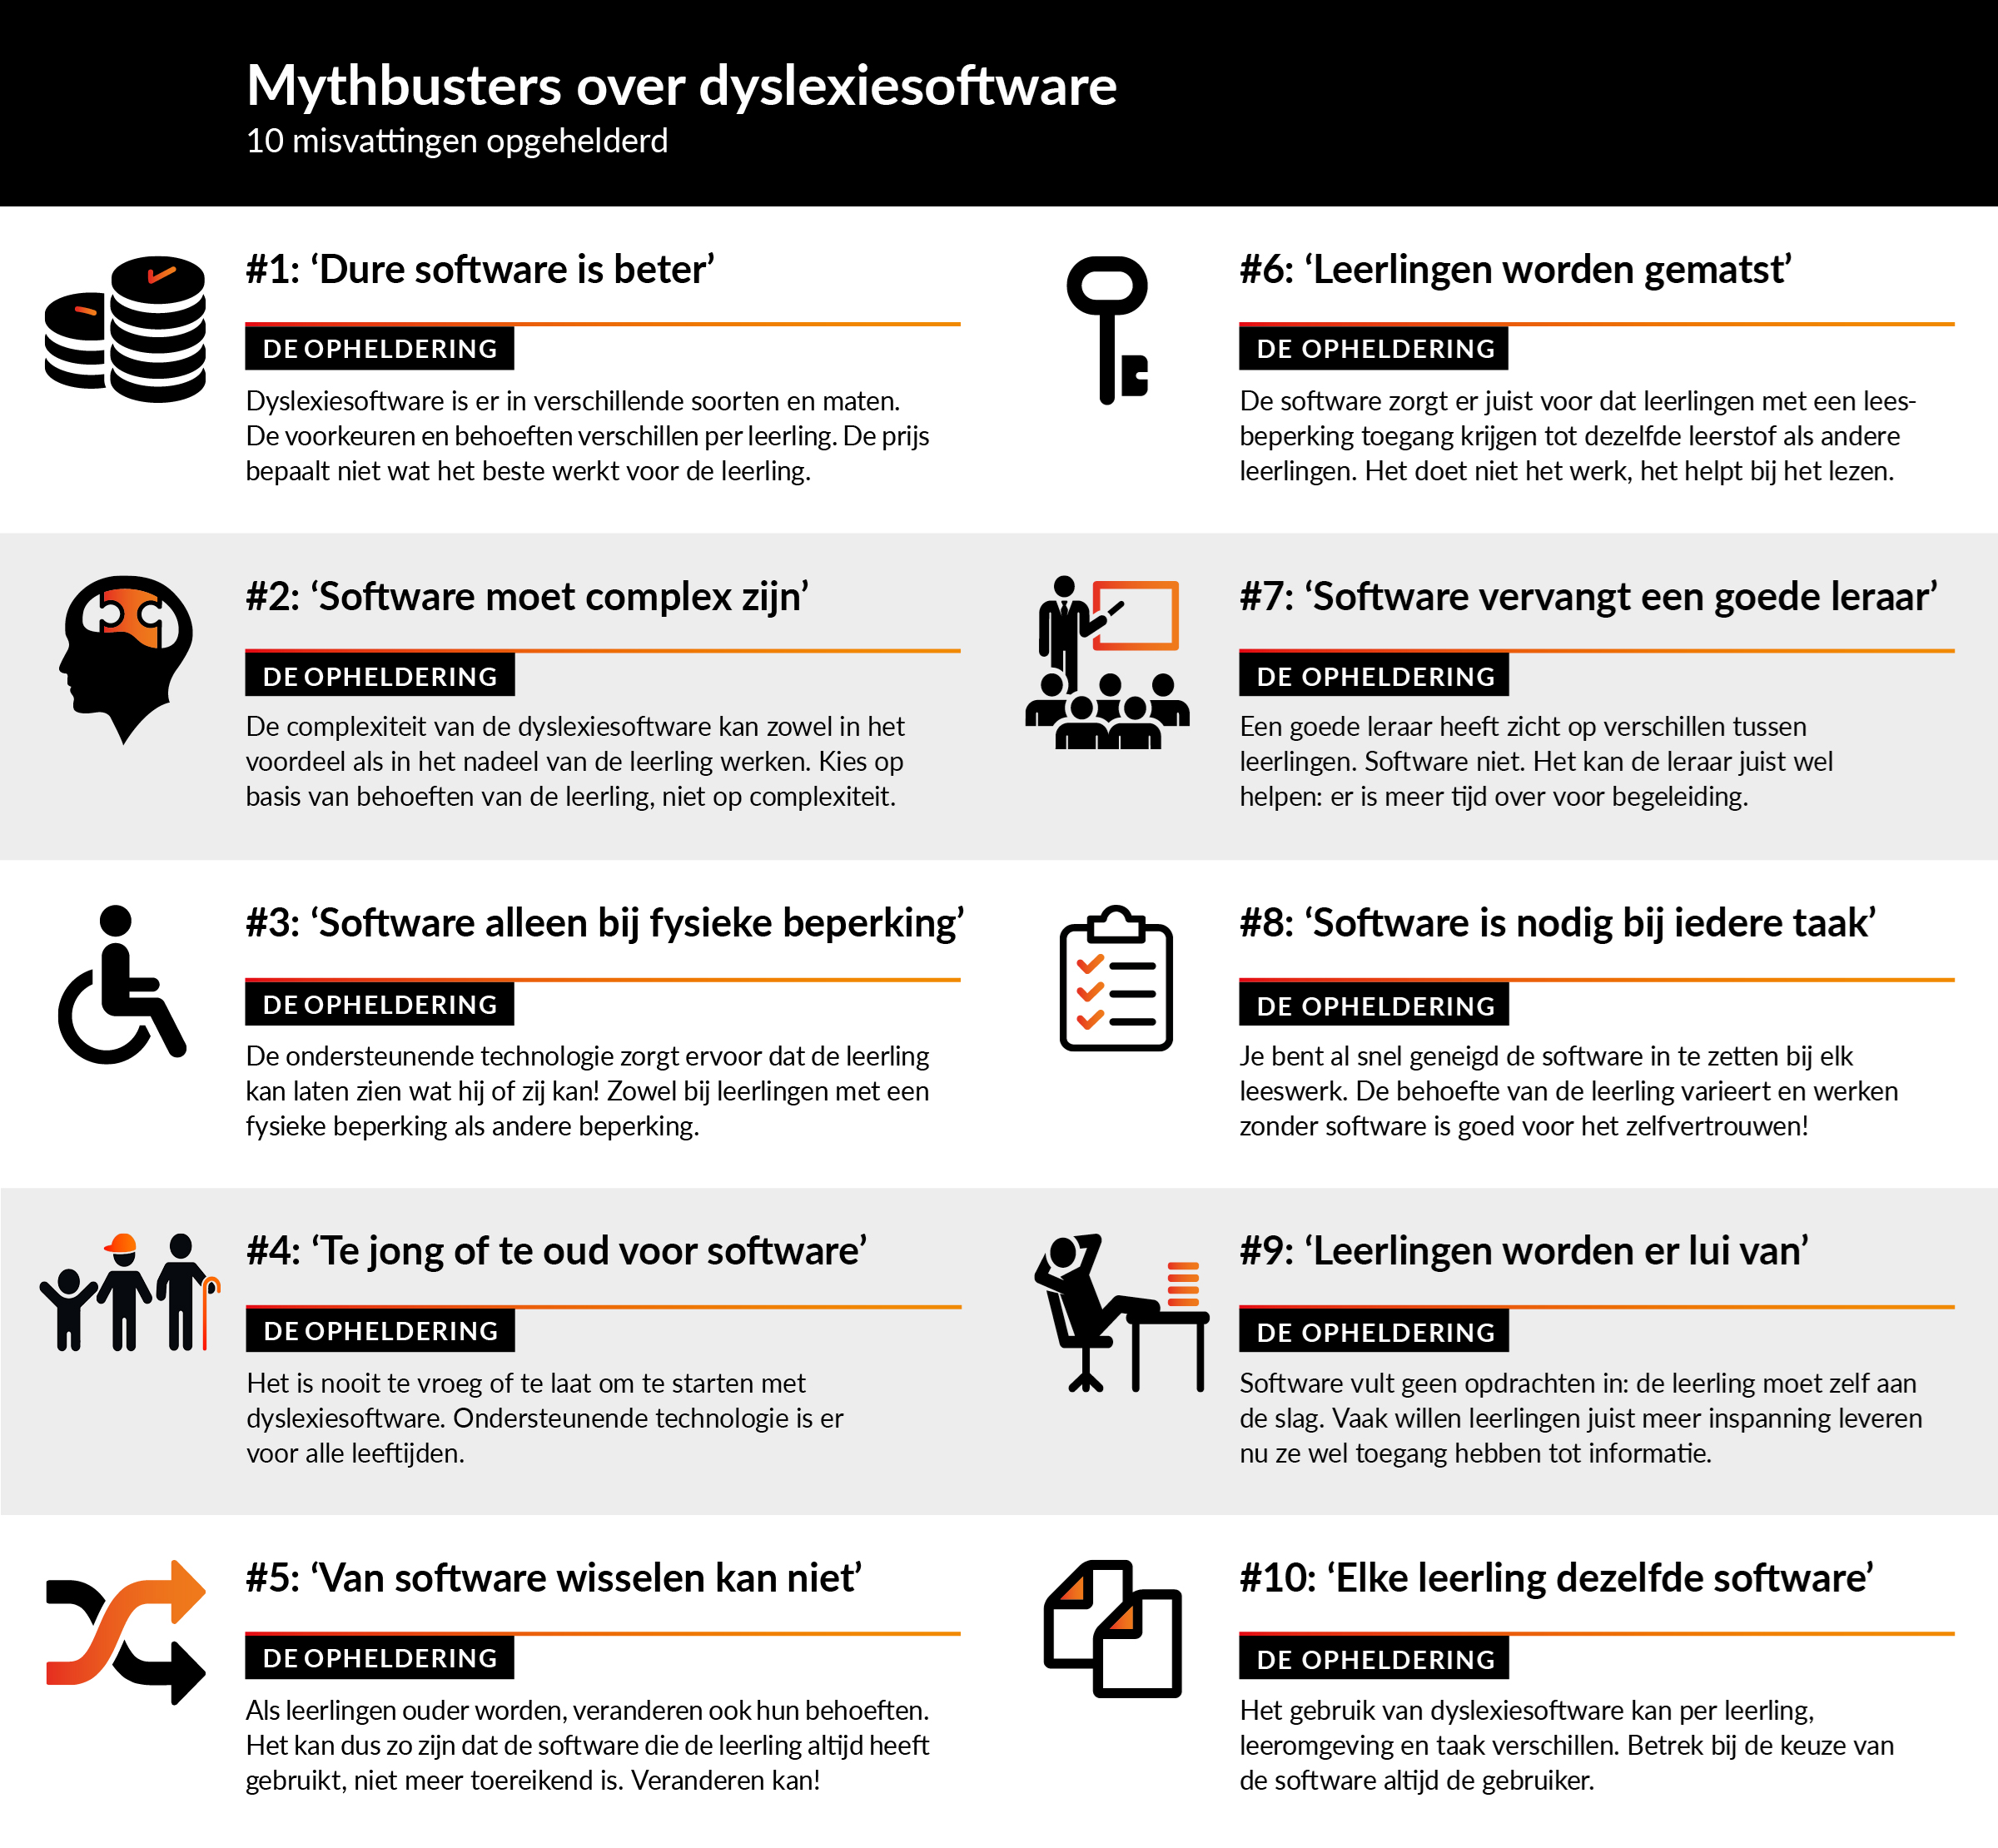 10 mythes over dyslexiesoftware opgehelderd